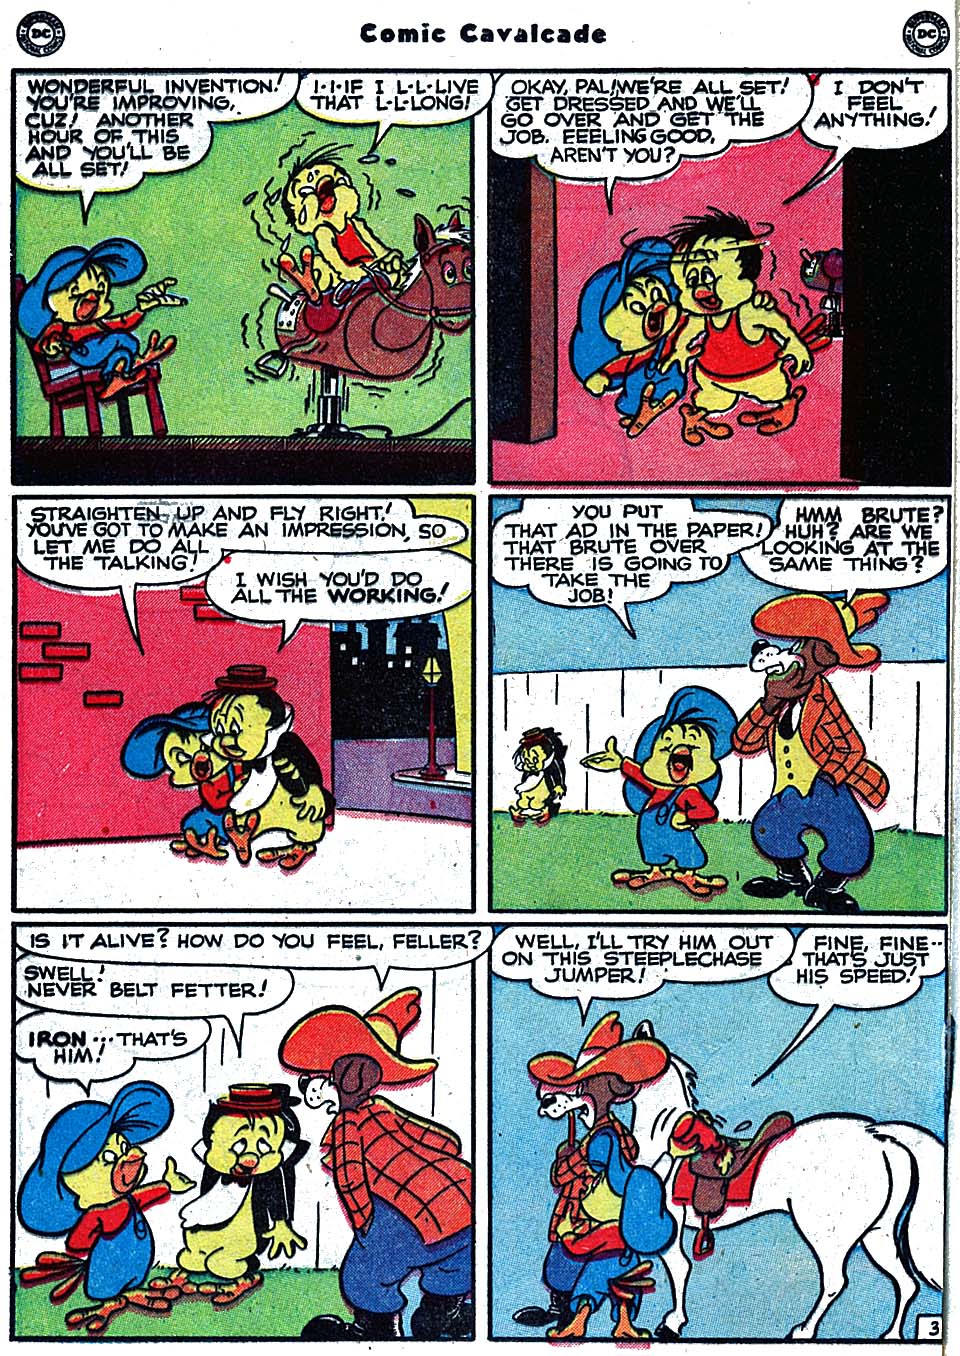 Comic Cavalcade issue 38 - Page 28